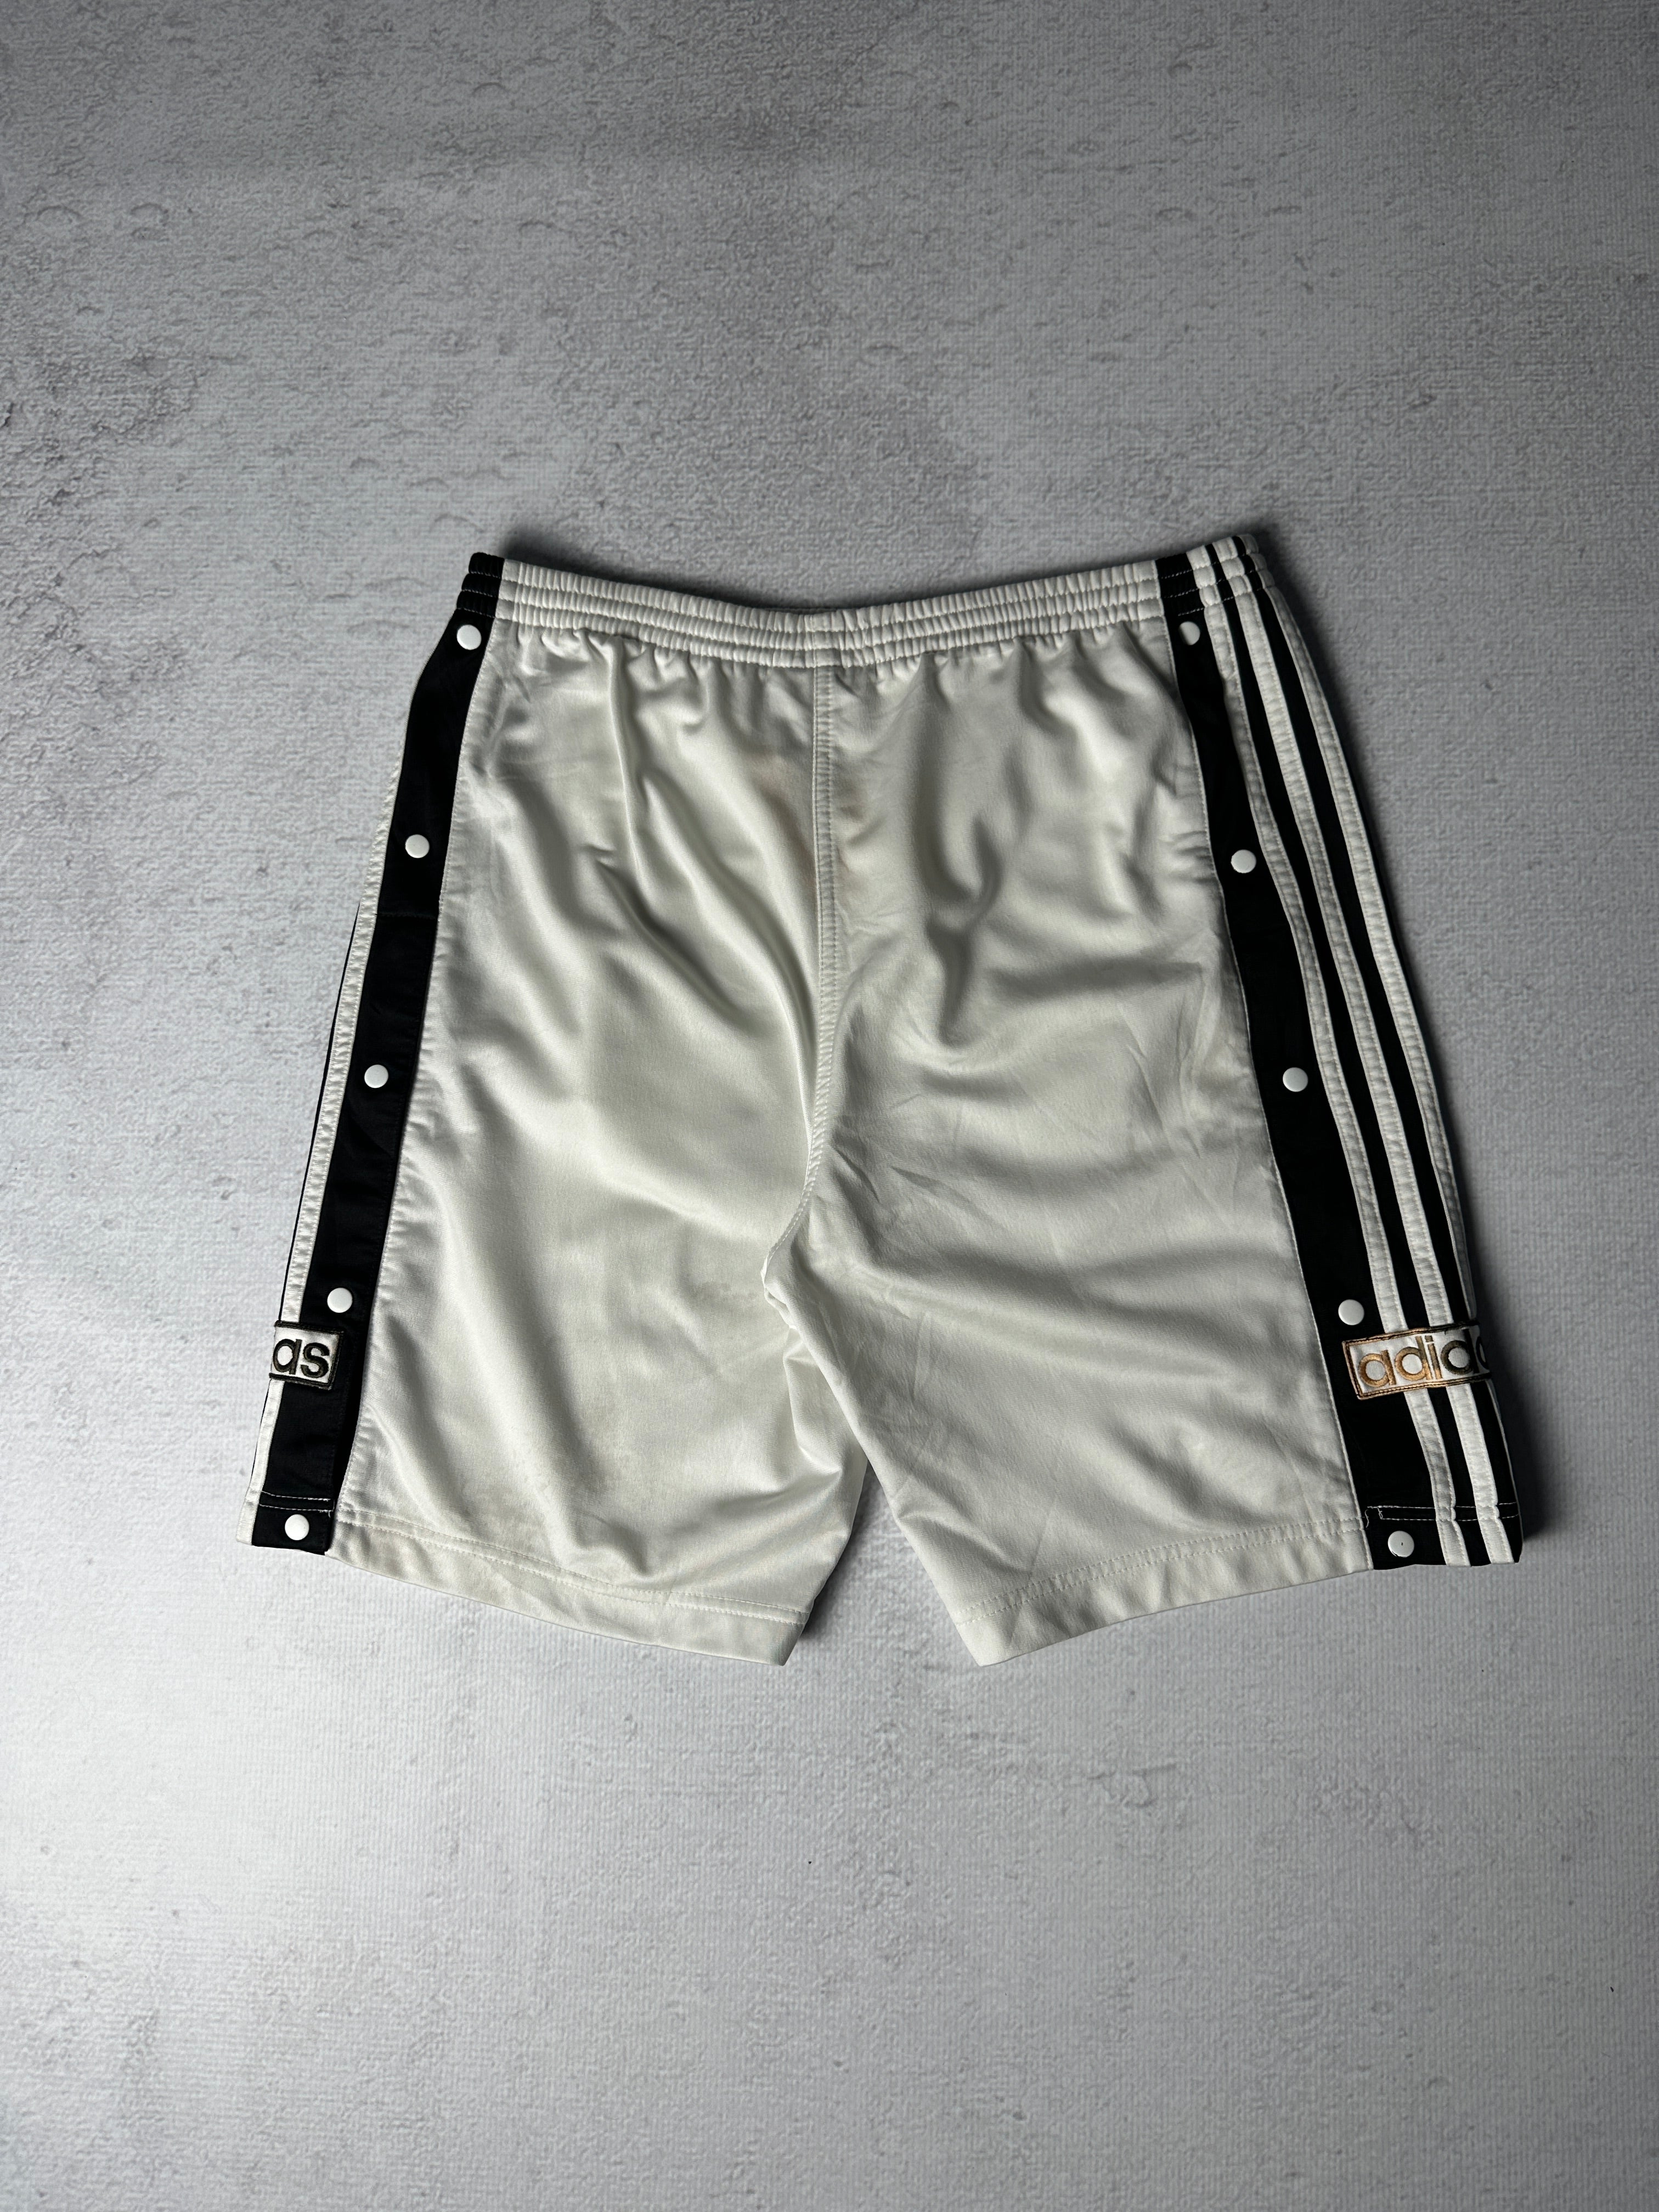 Vintage Adidas Tearaway Shorts - Men's Large